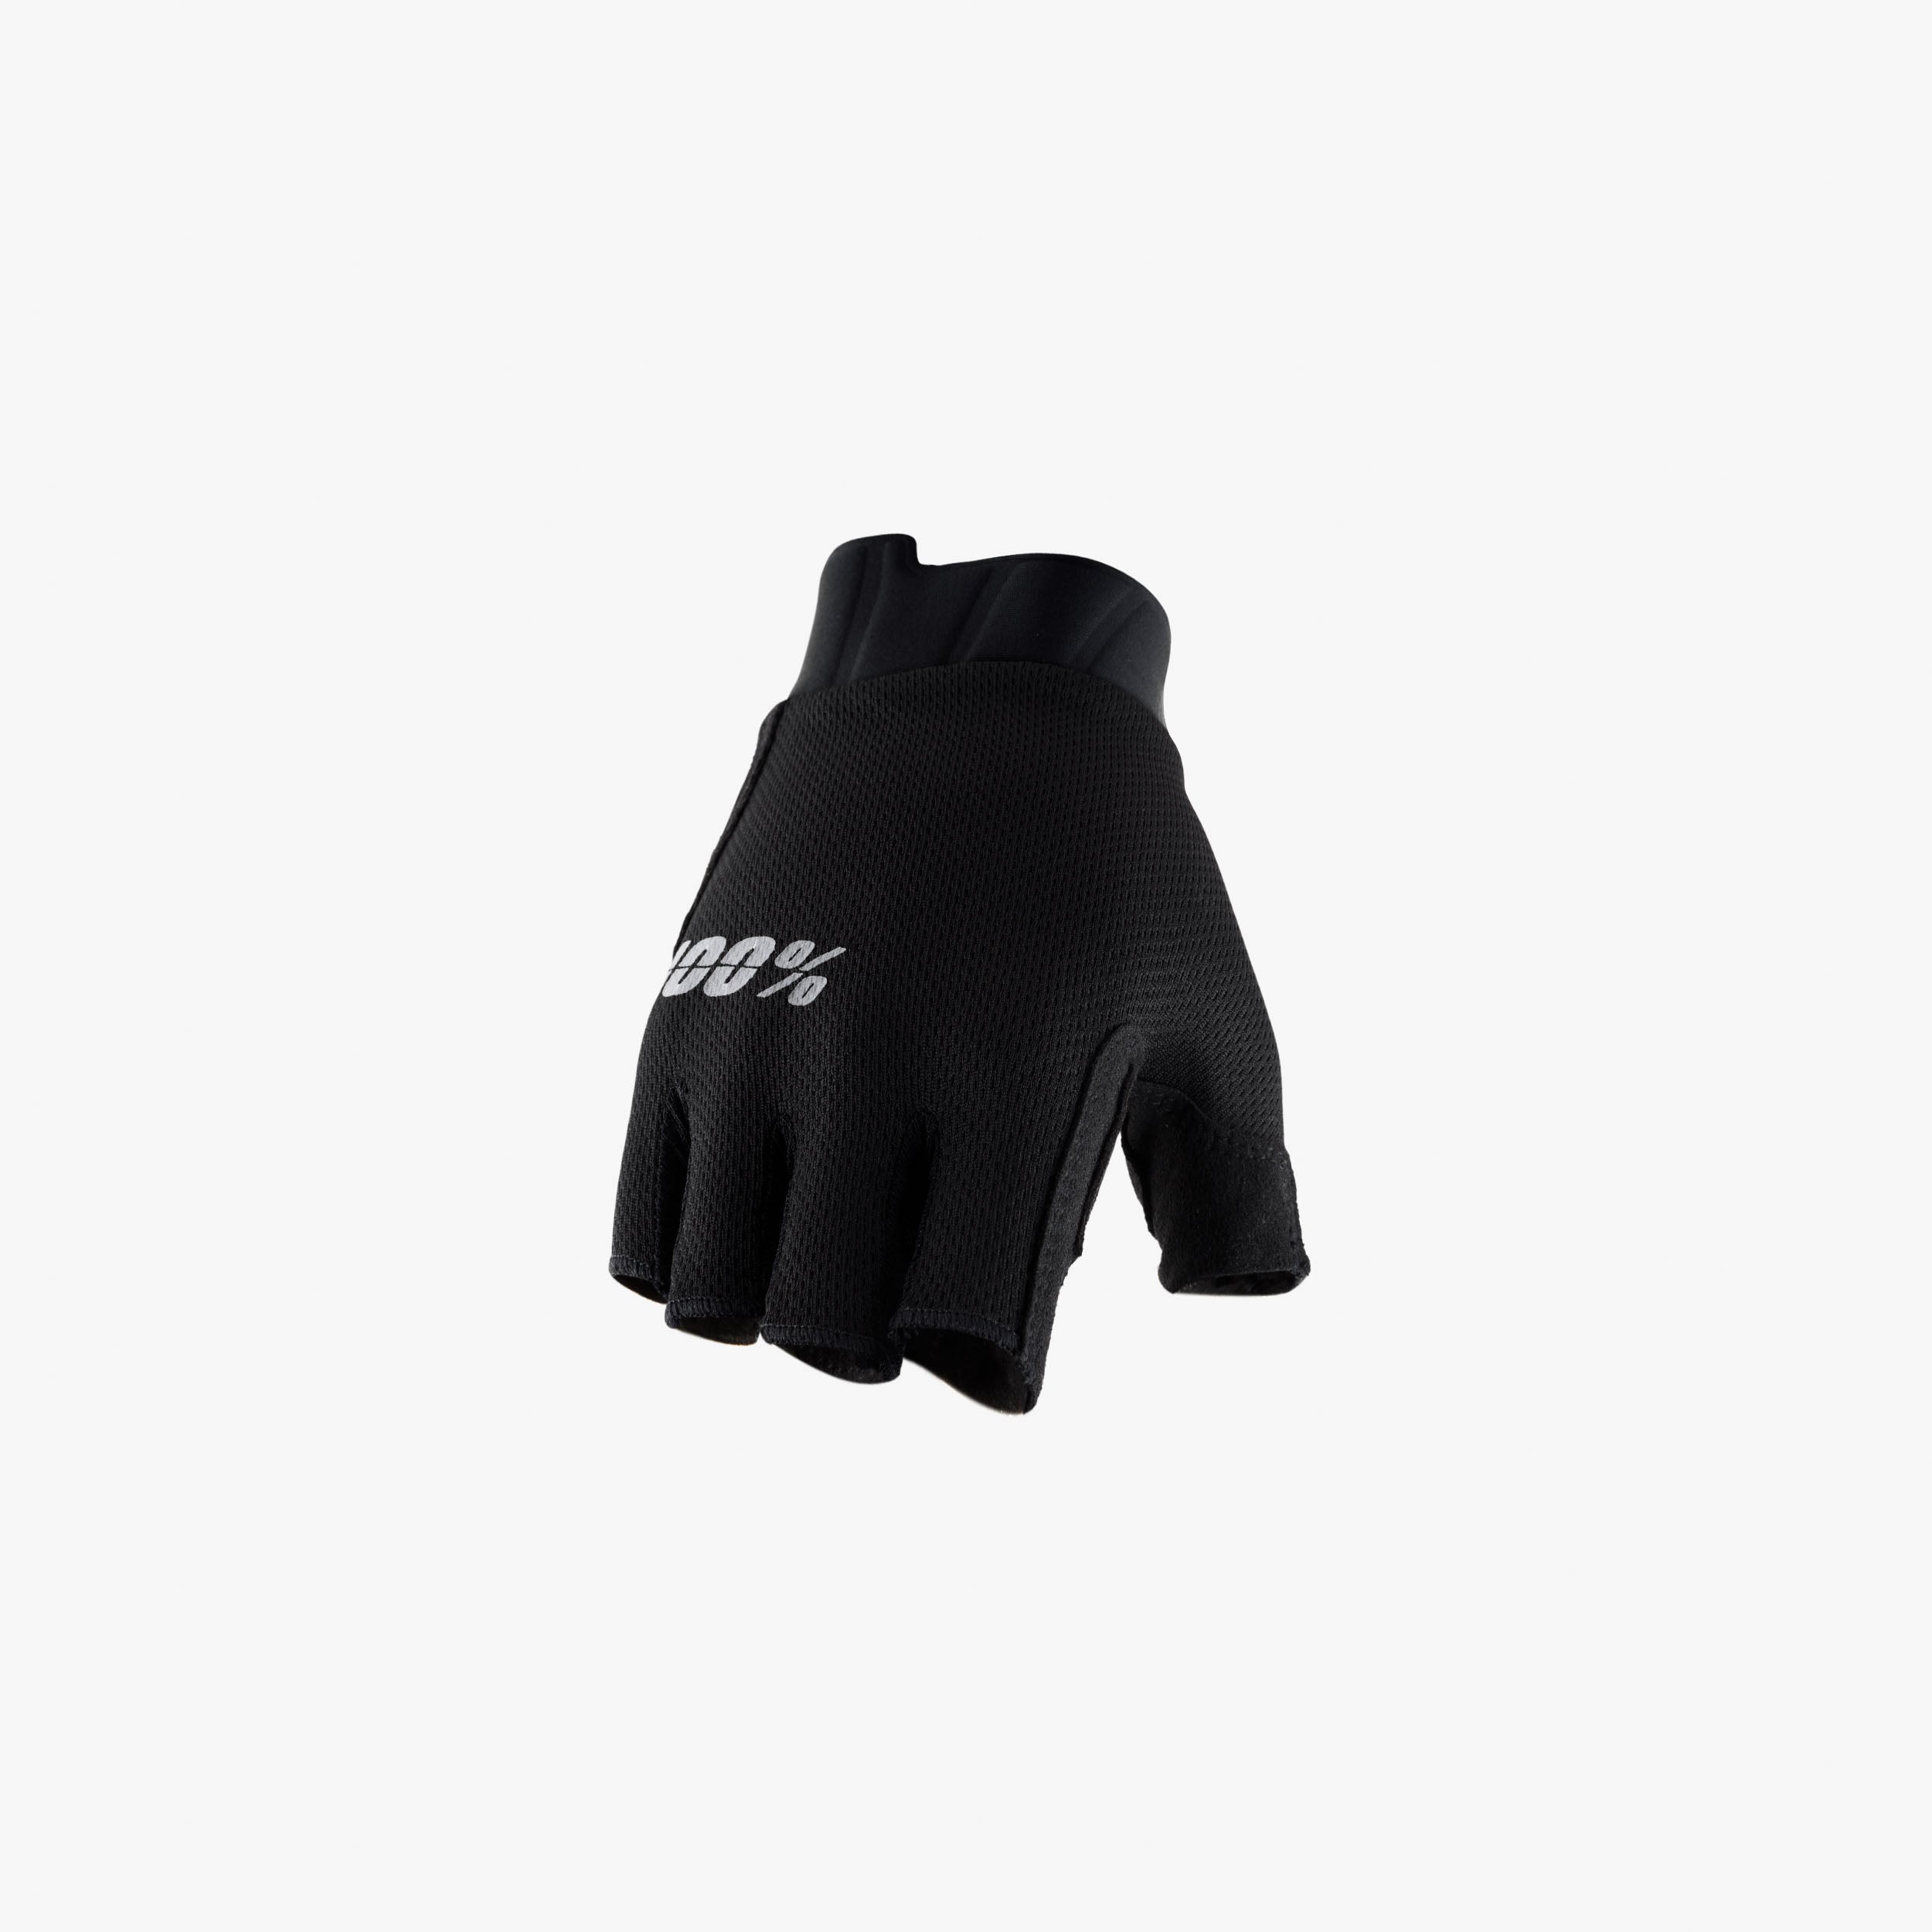 EXCEEDA Women's Gel Short Finger Gloves Black